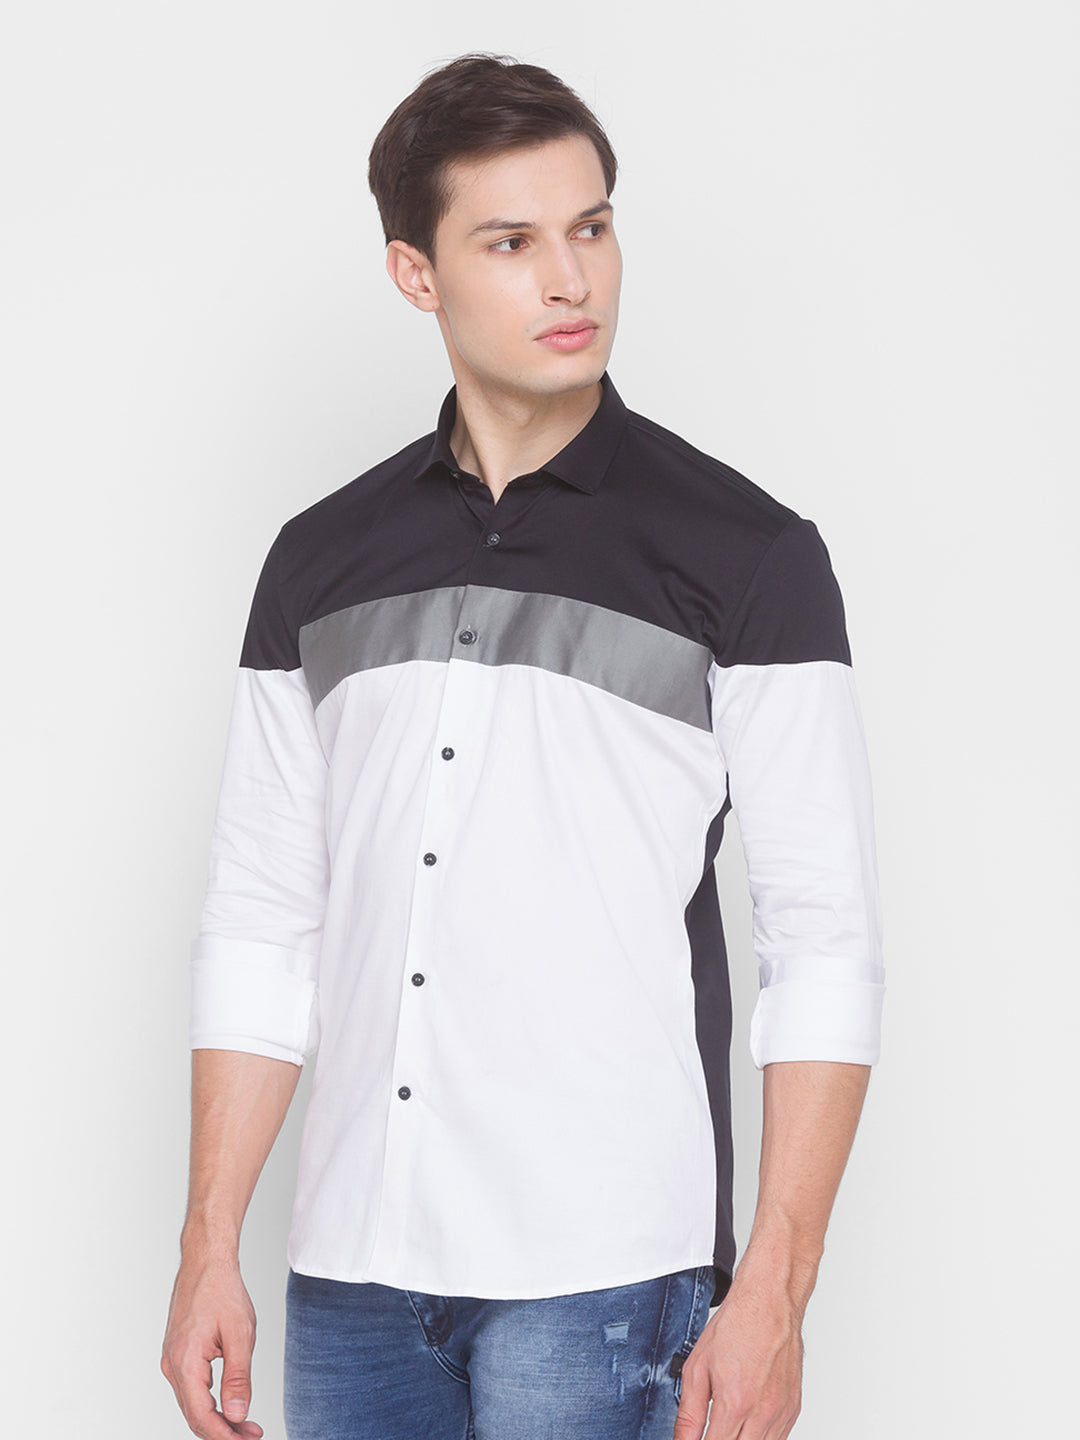 Black & White Color Block Shirt